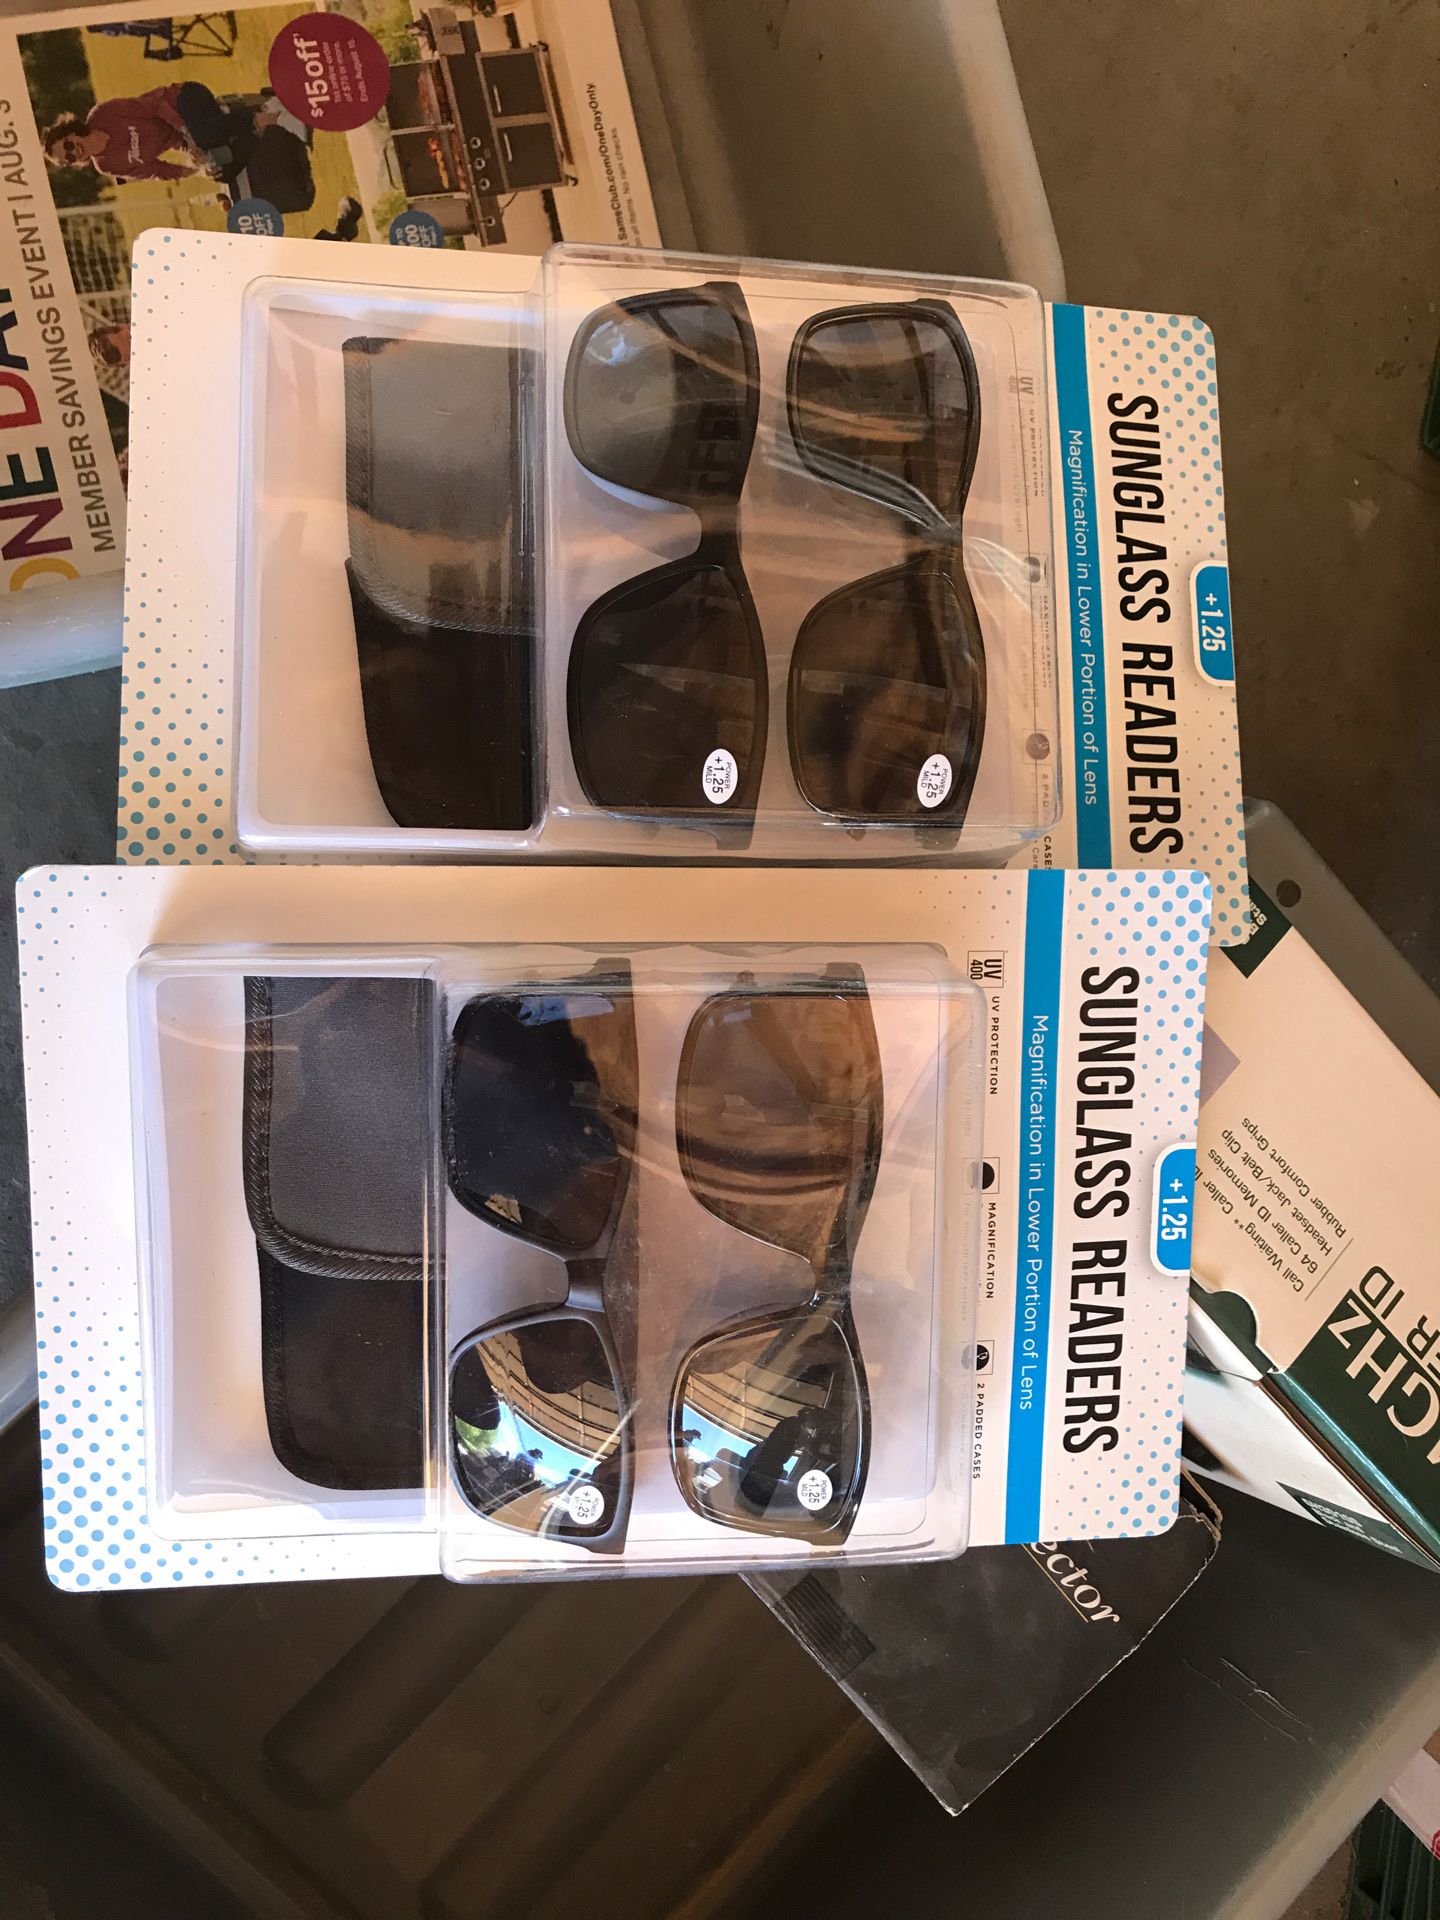 Reader’s sunglasses